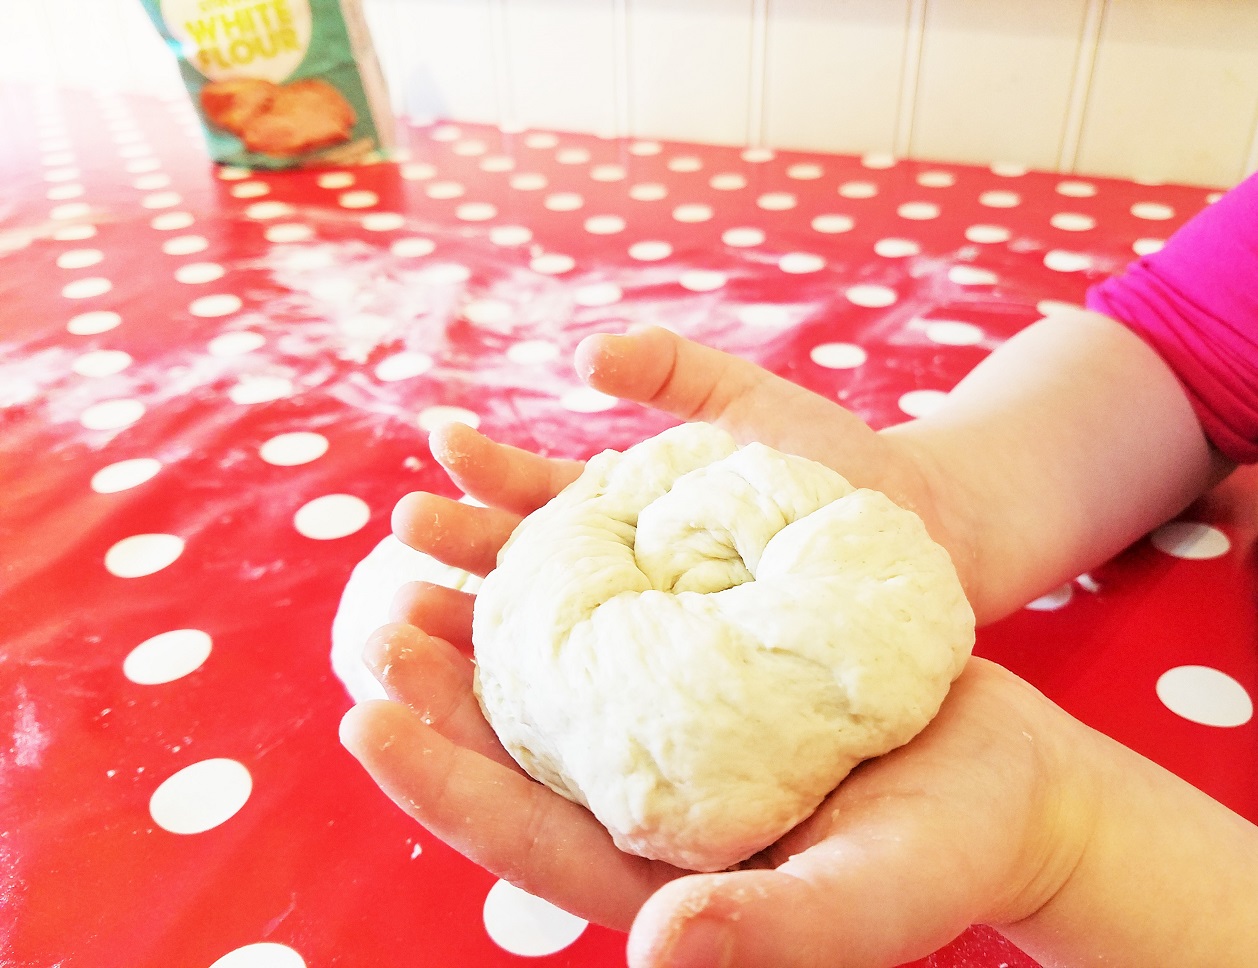 Bread maker dough - simple bread shapes spiral